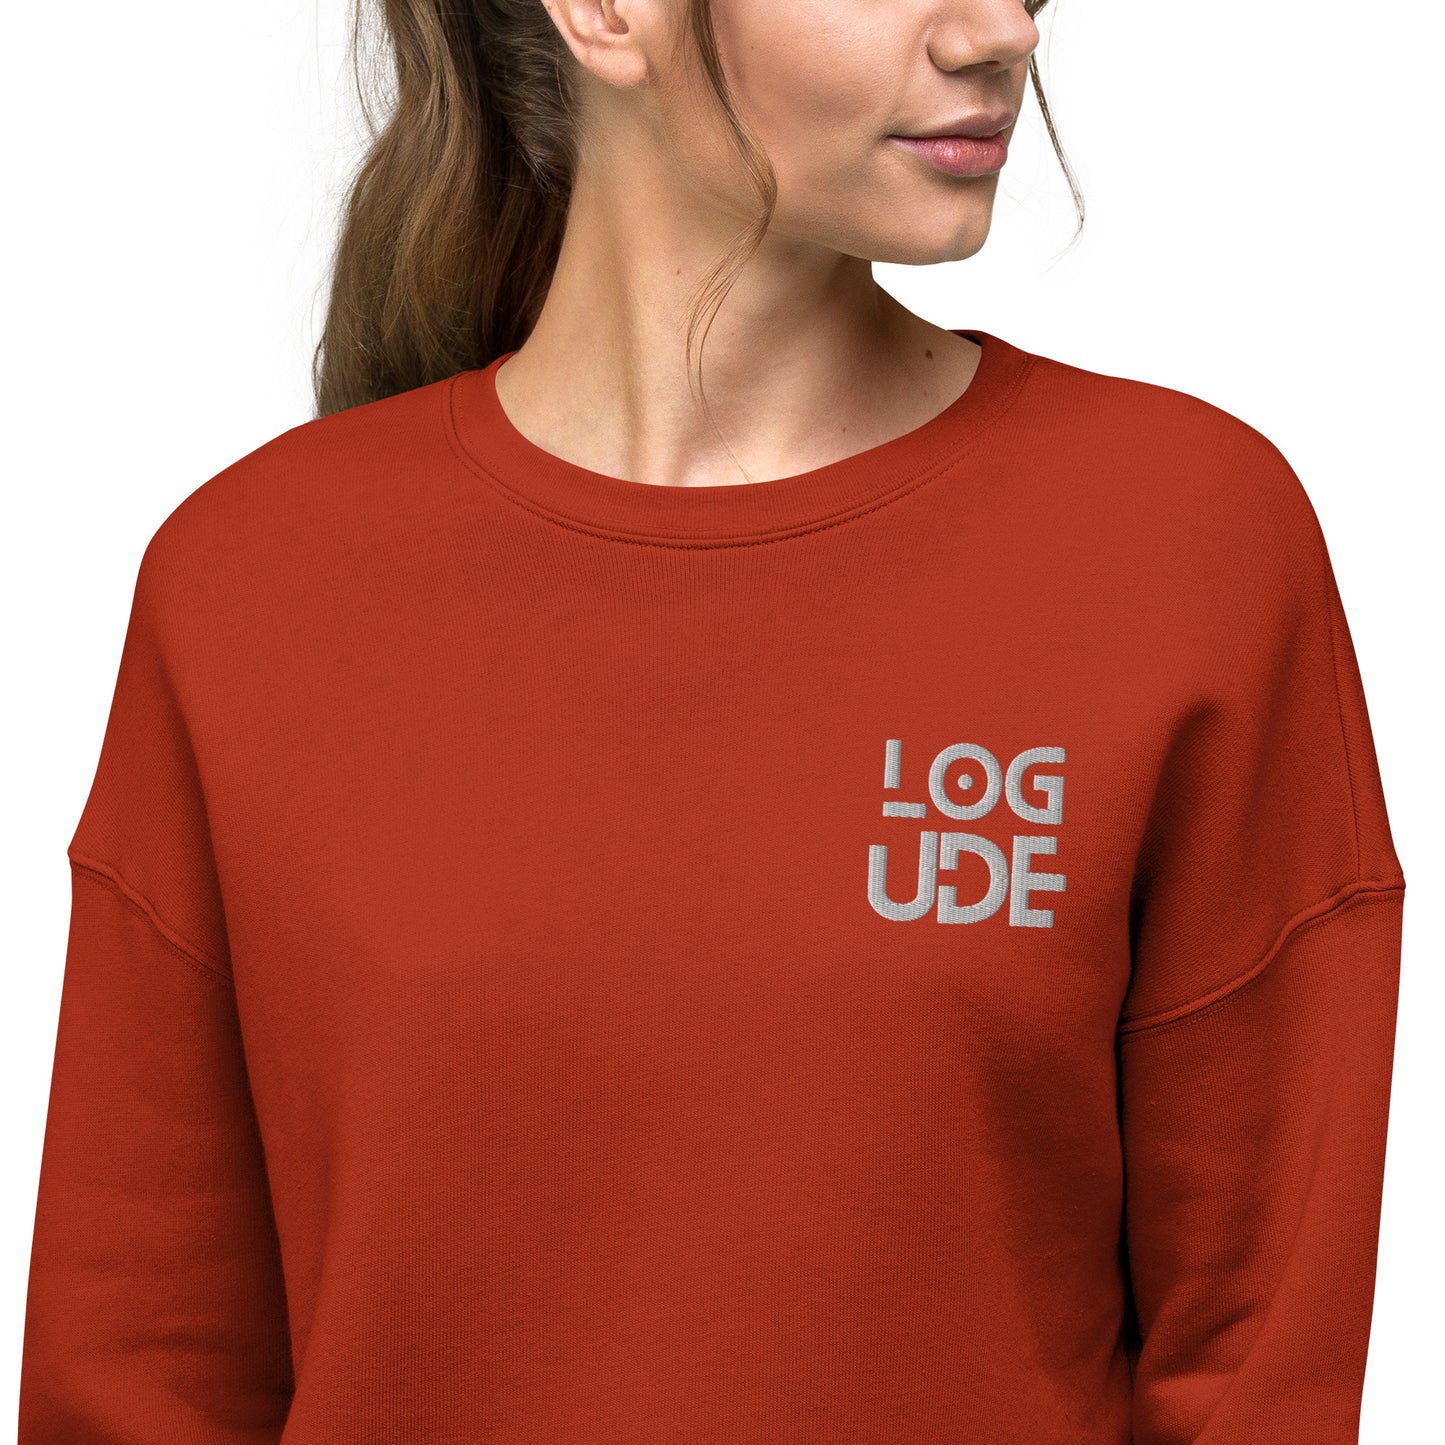 Logude Crop Sweatshirt